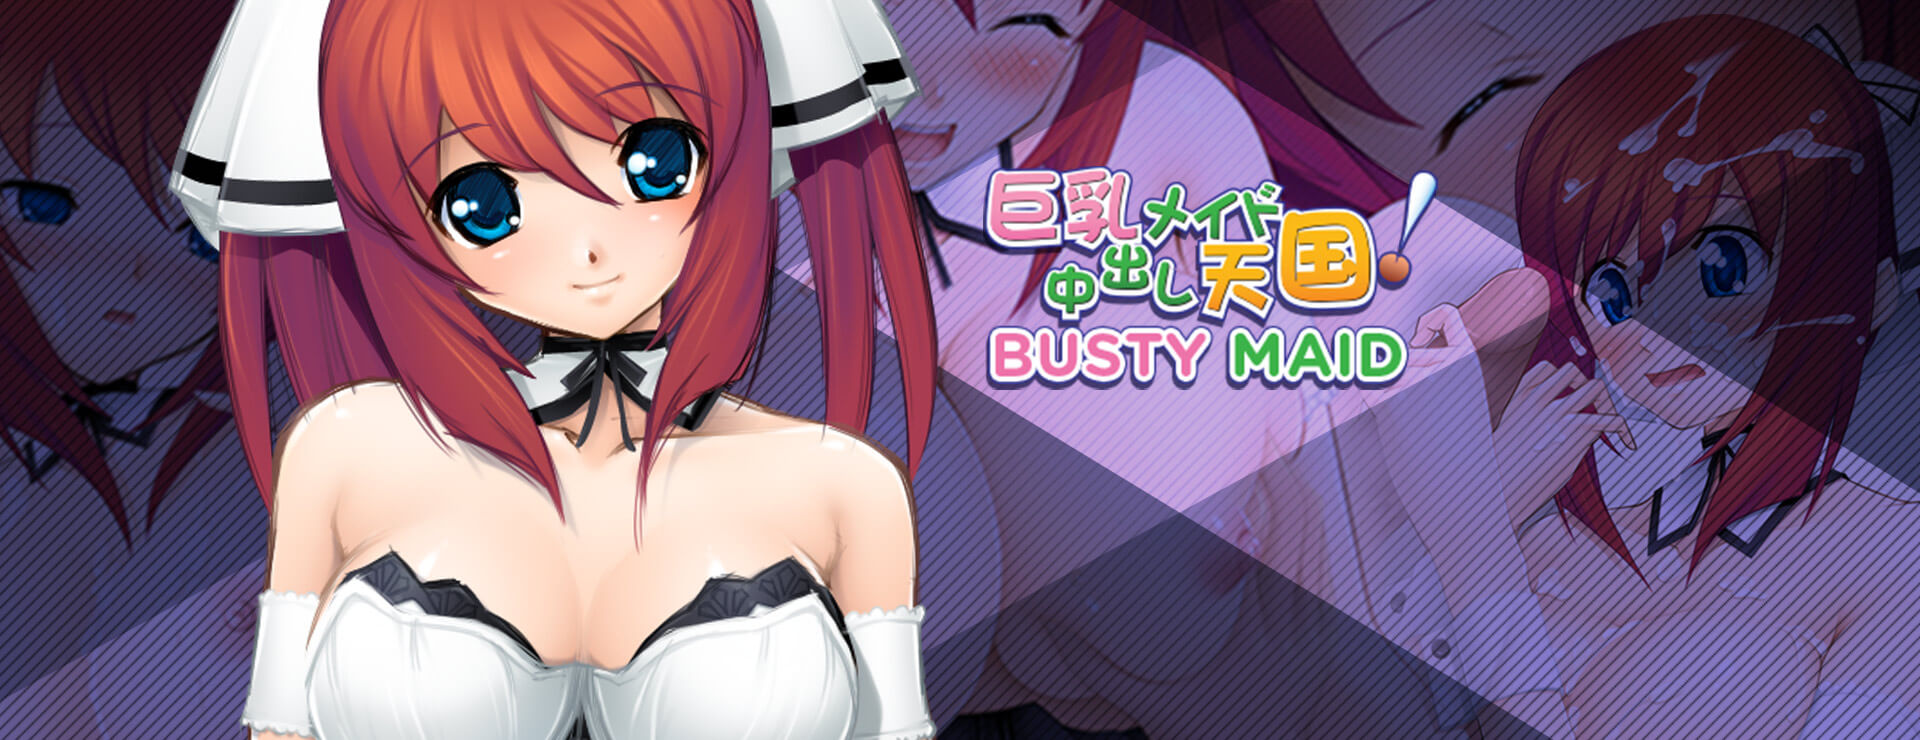 Busty Maid - Roman Visuel Jeu